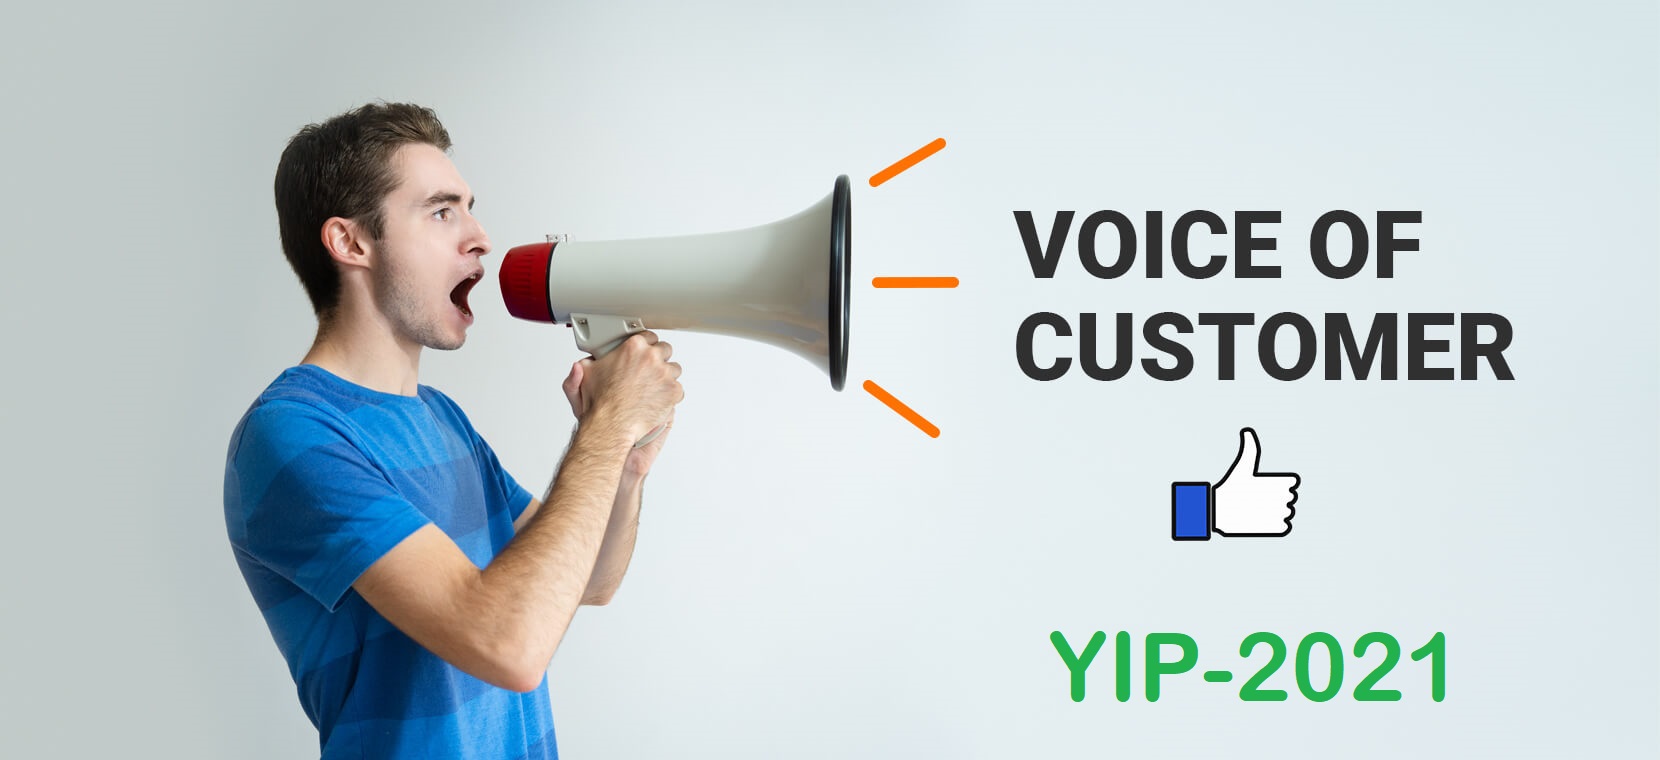 Voice of Customer